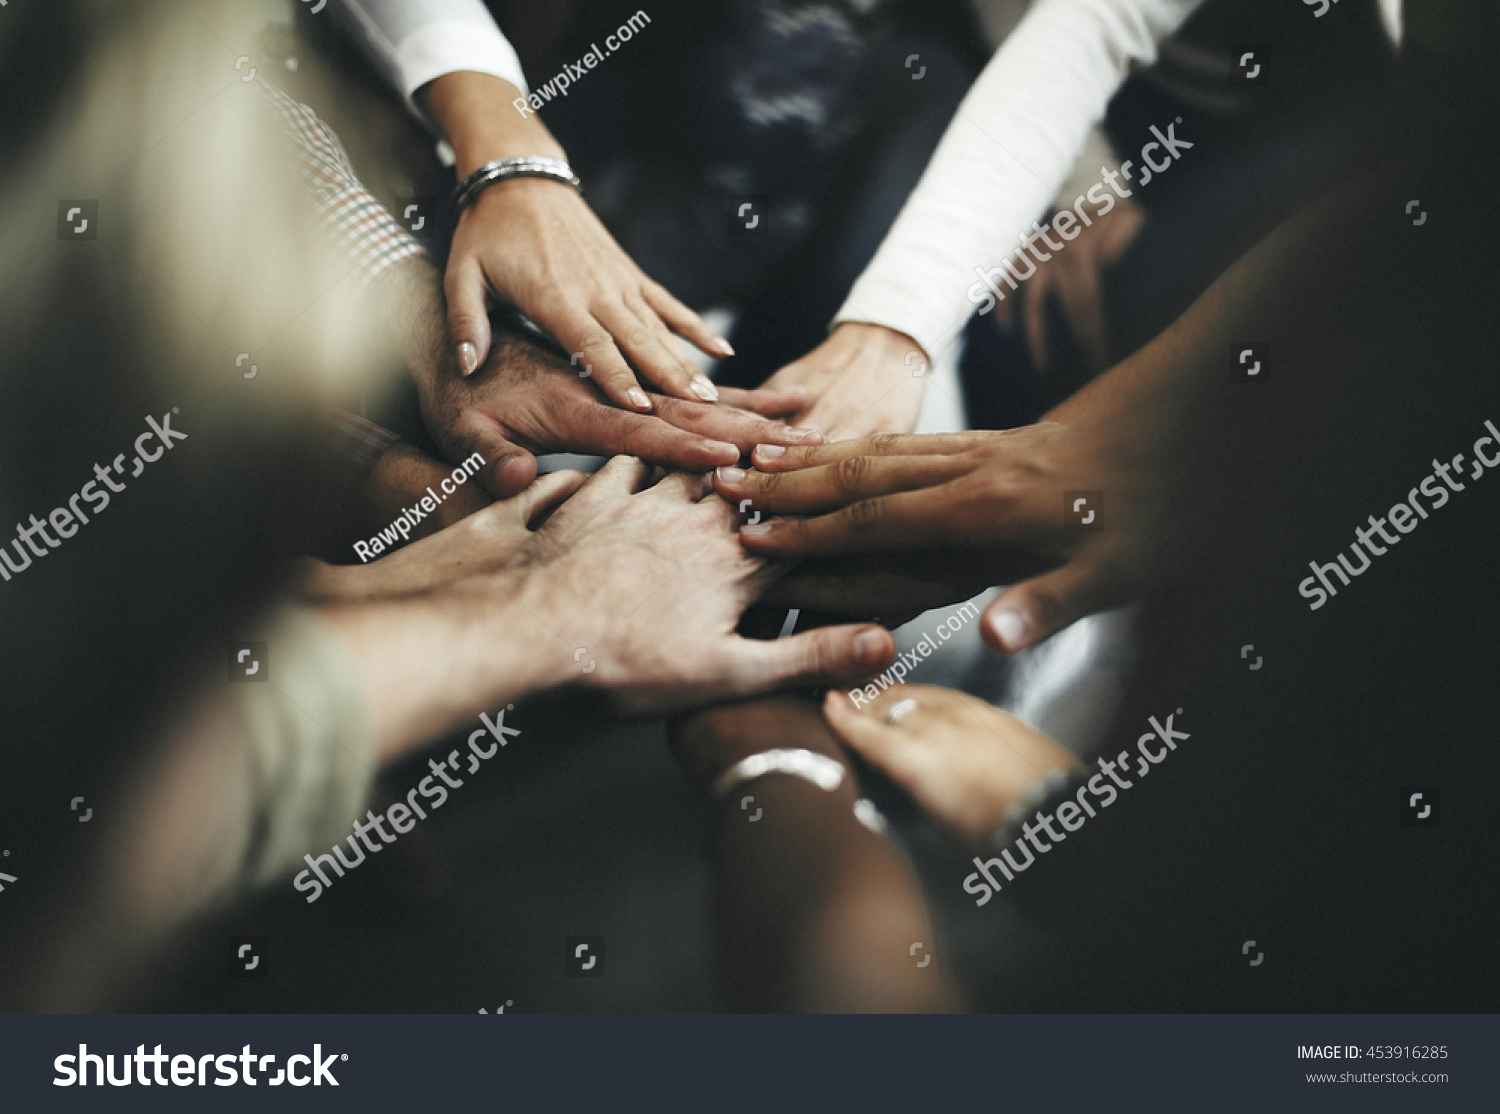 Teamwork Join Hands Support Together Concept #453916285